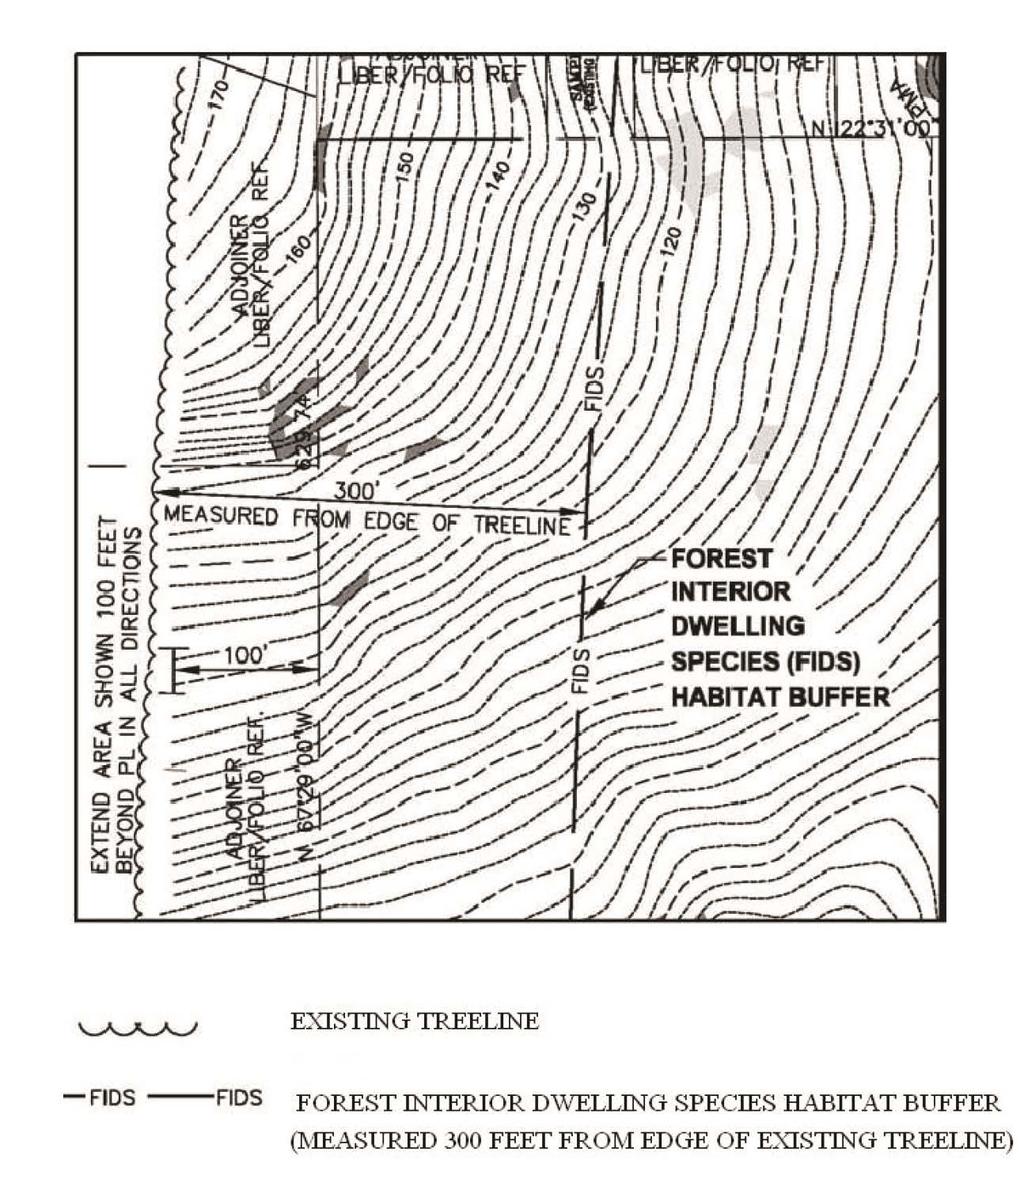 Map B4. Forest Interior Dwelling Species (FIDS) Habitat Buffer 3.